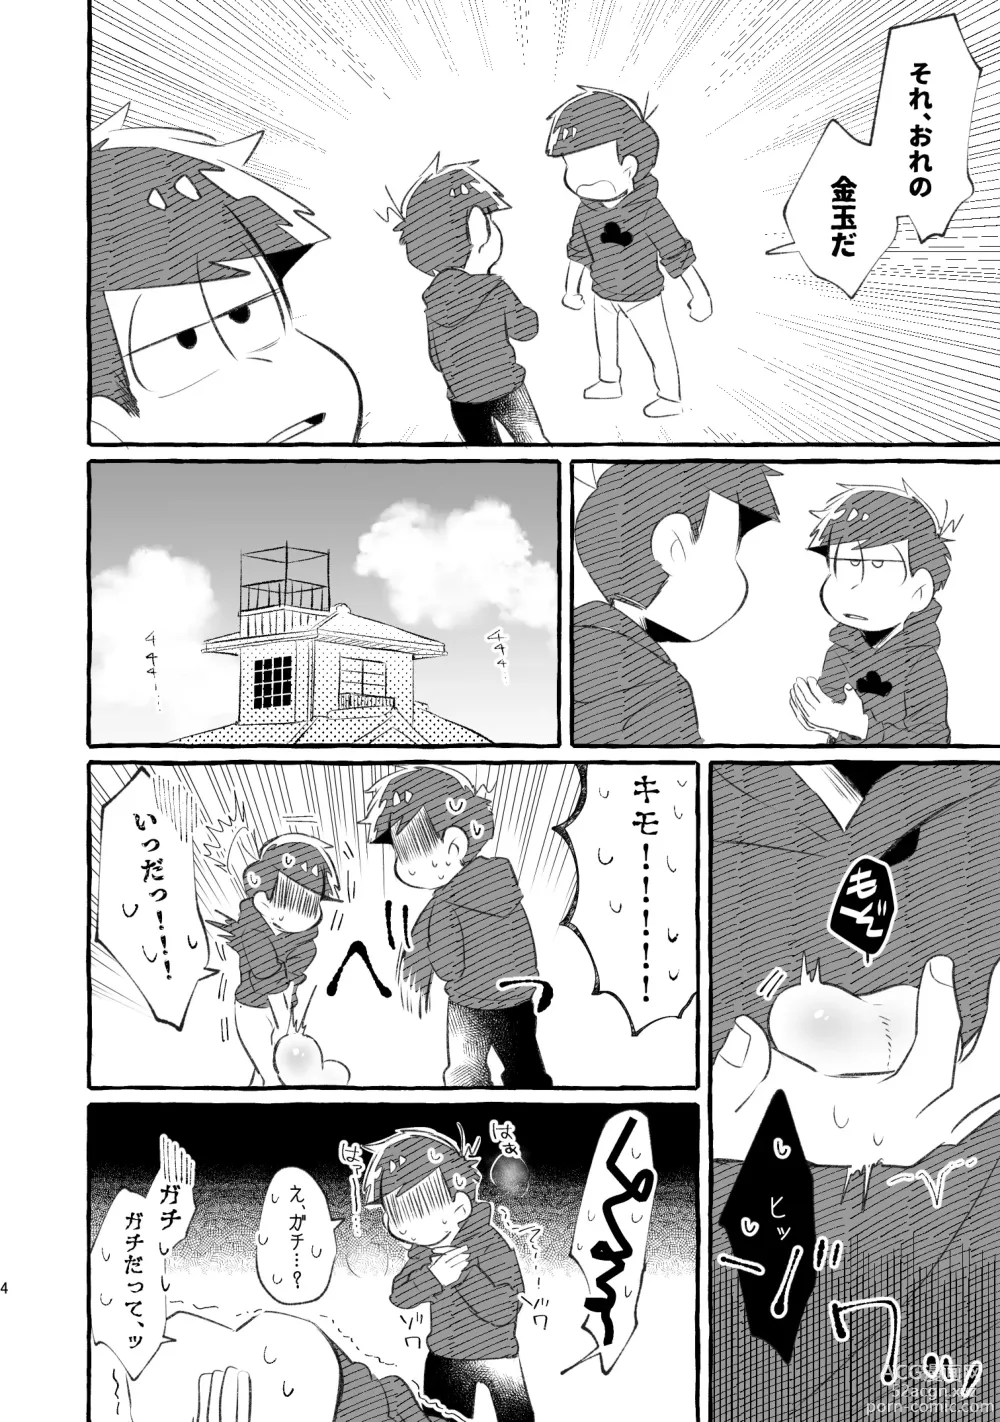 Page 3 of doujinshi Tatata Iro Dojikuu Riba